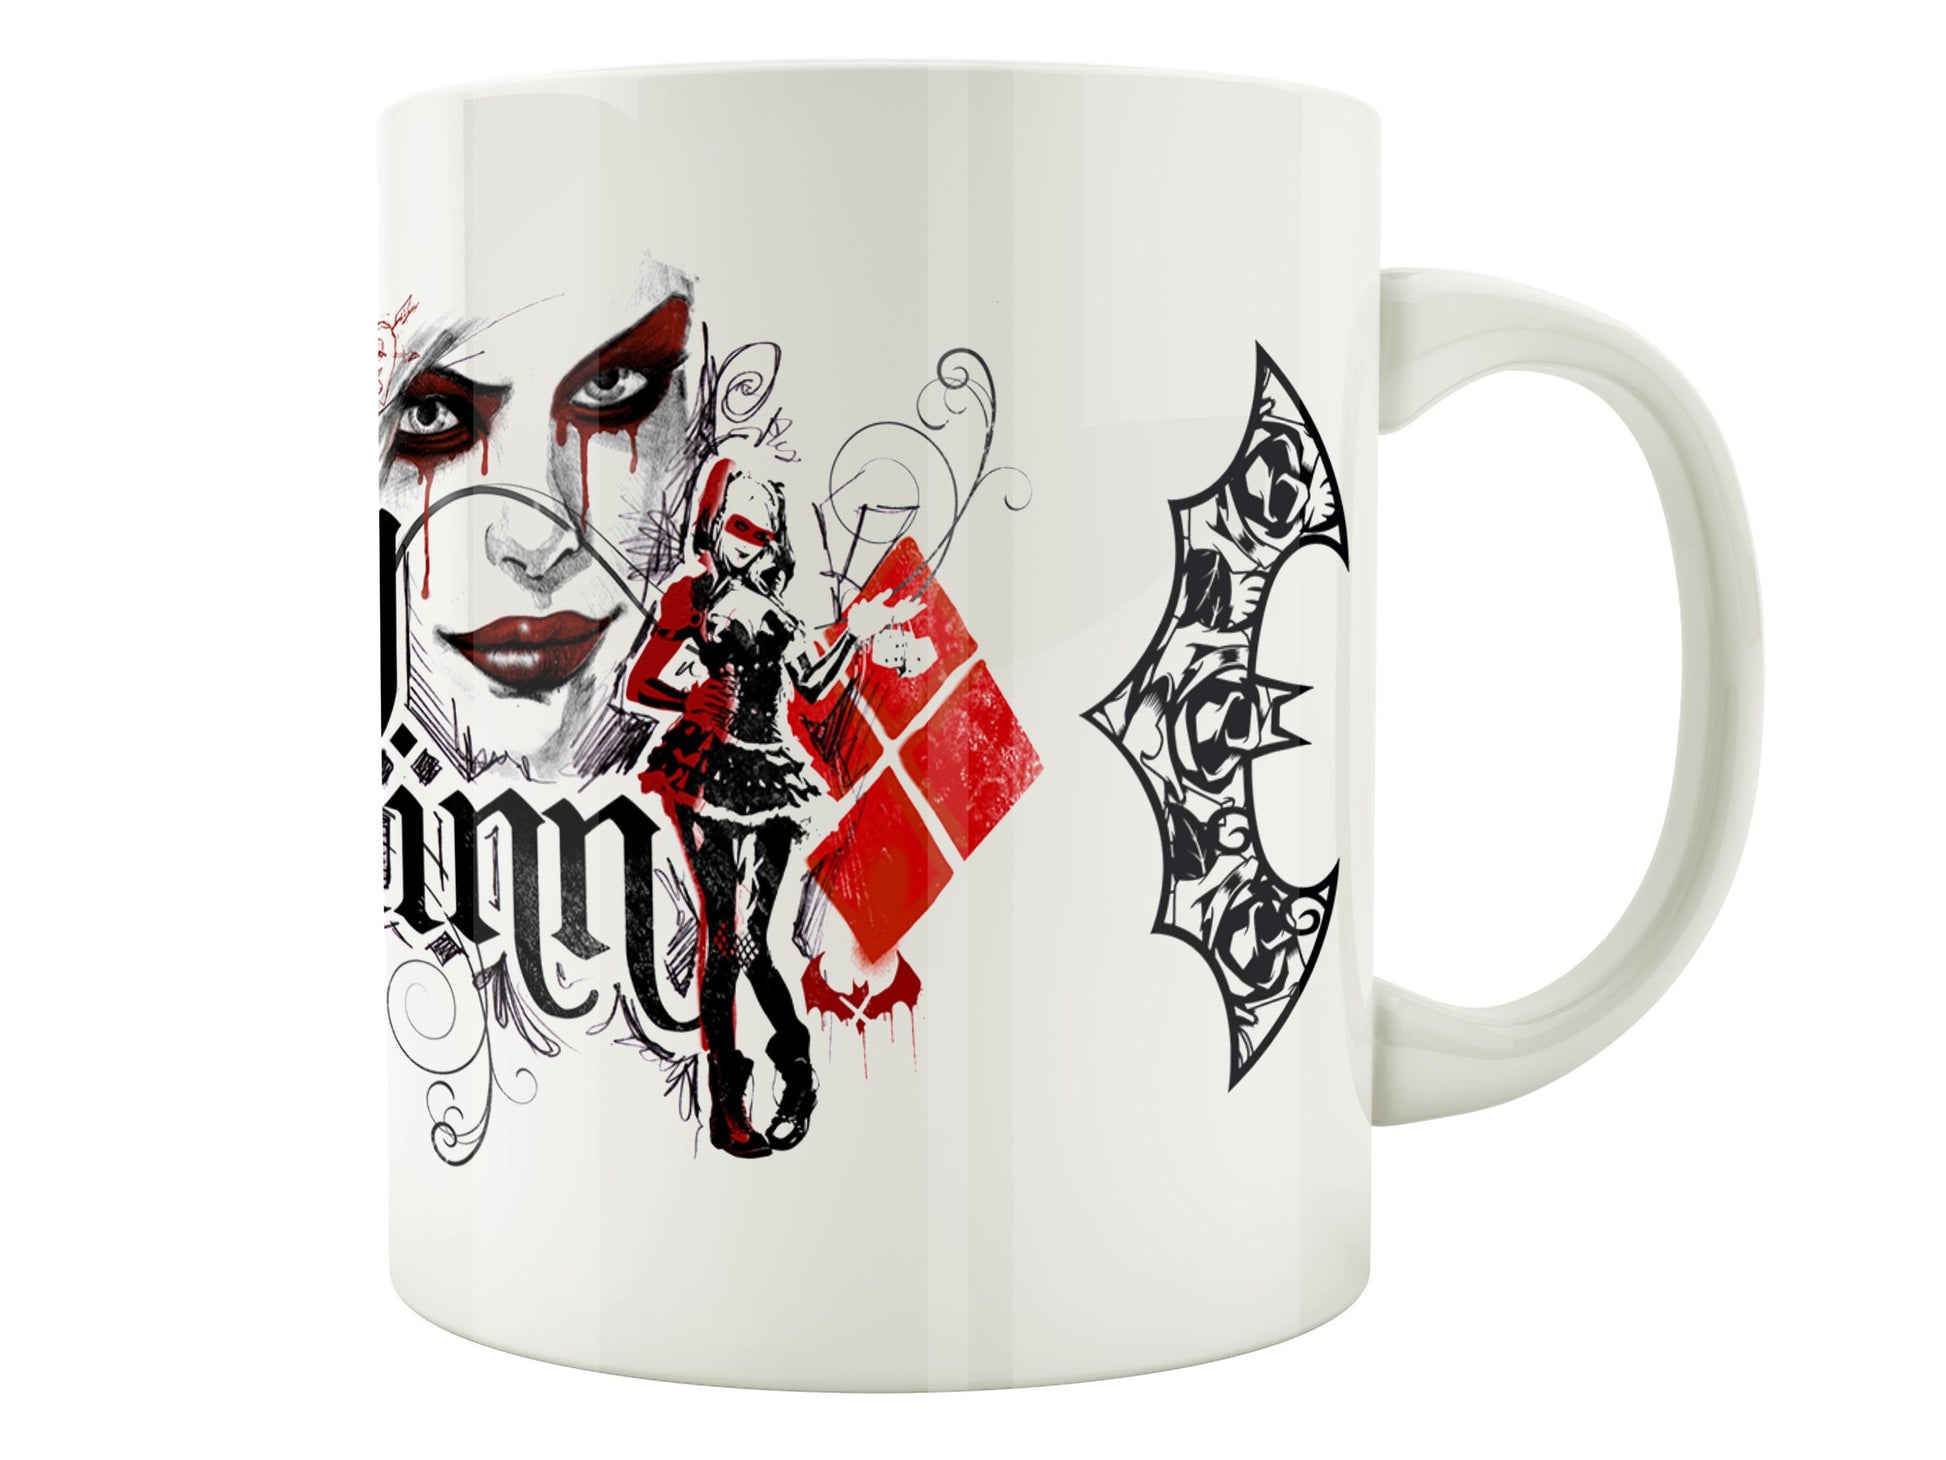 Mug Batman DC Comics - Harley Quinn